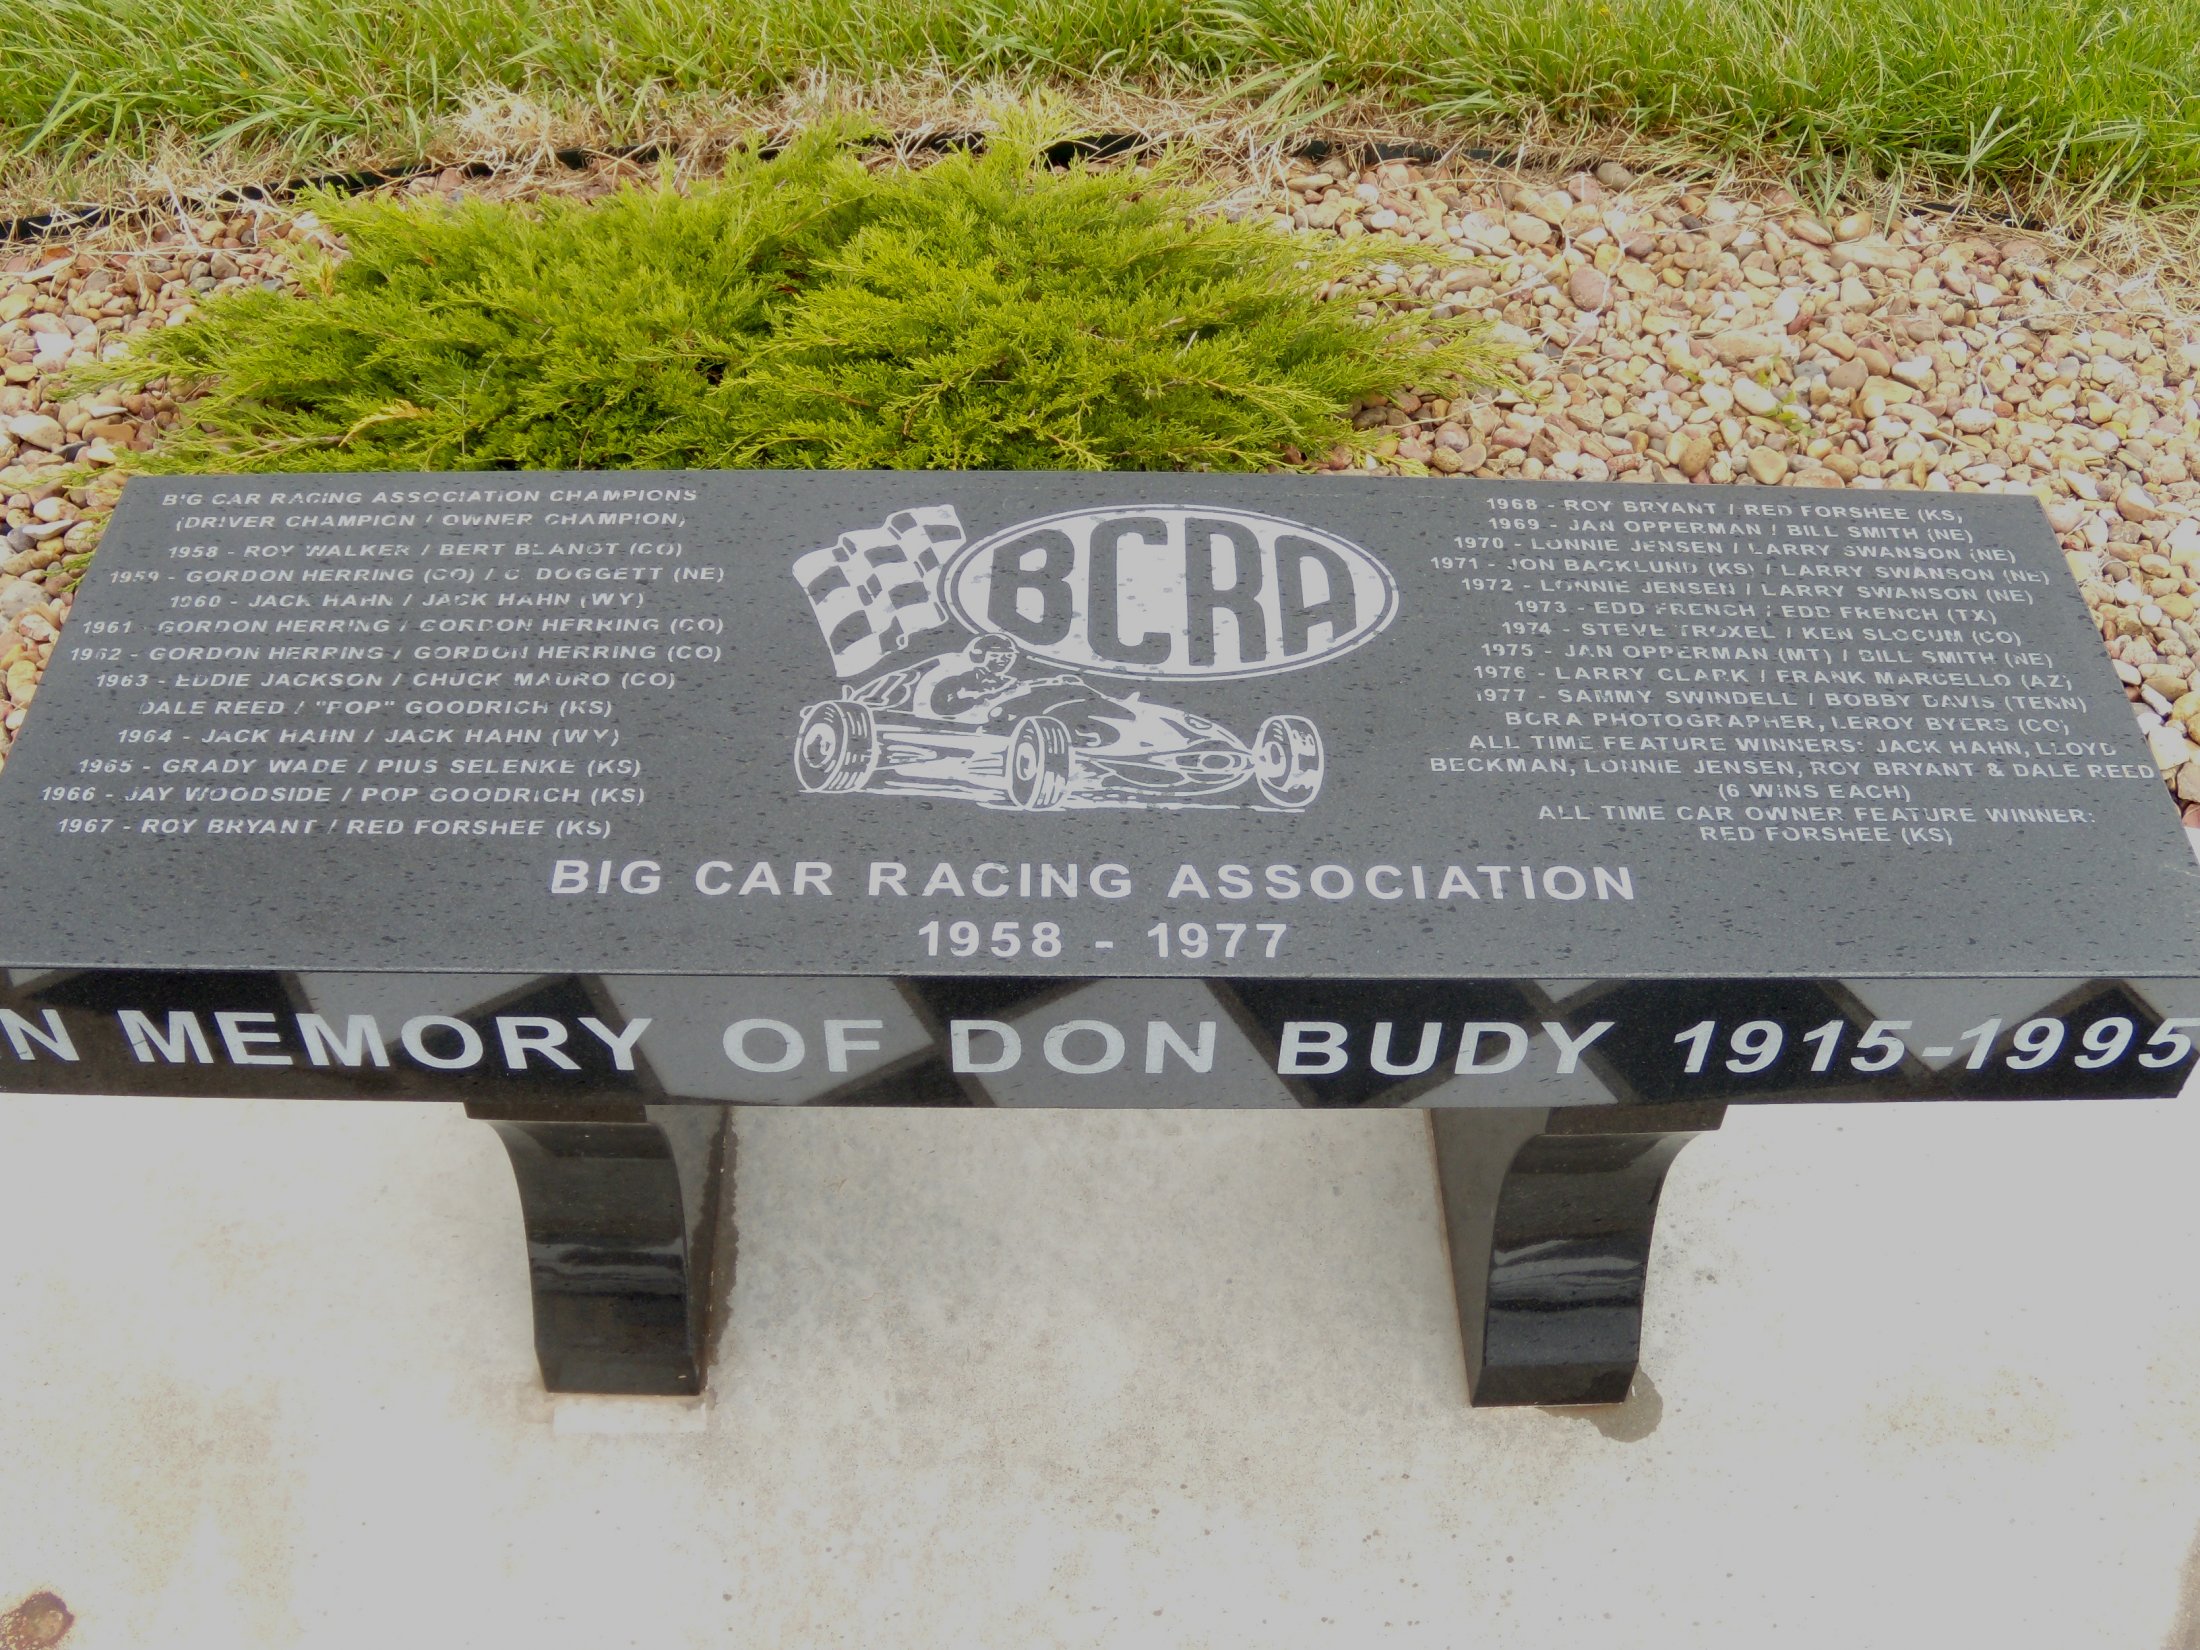 BCRA Commemorative Bench - Belleville, Ks